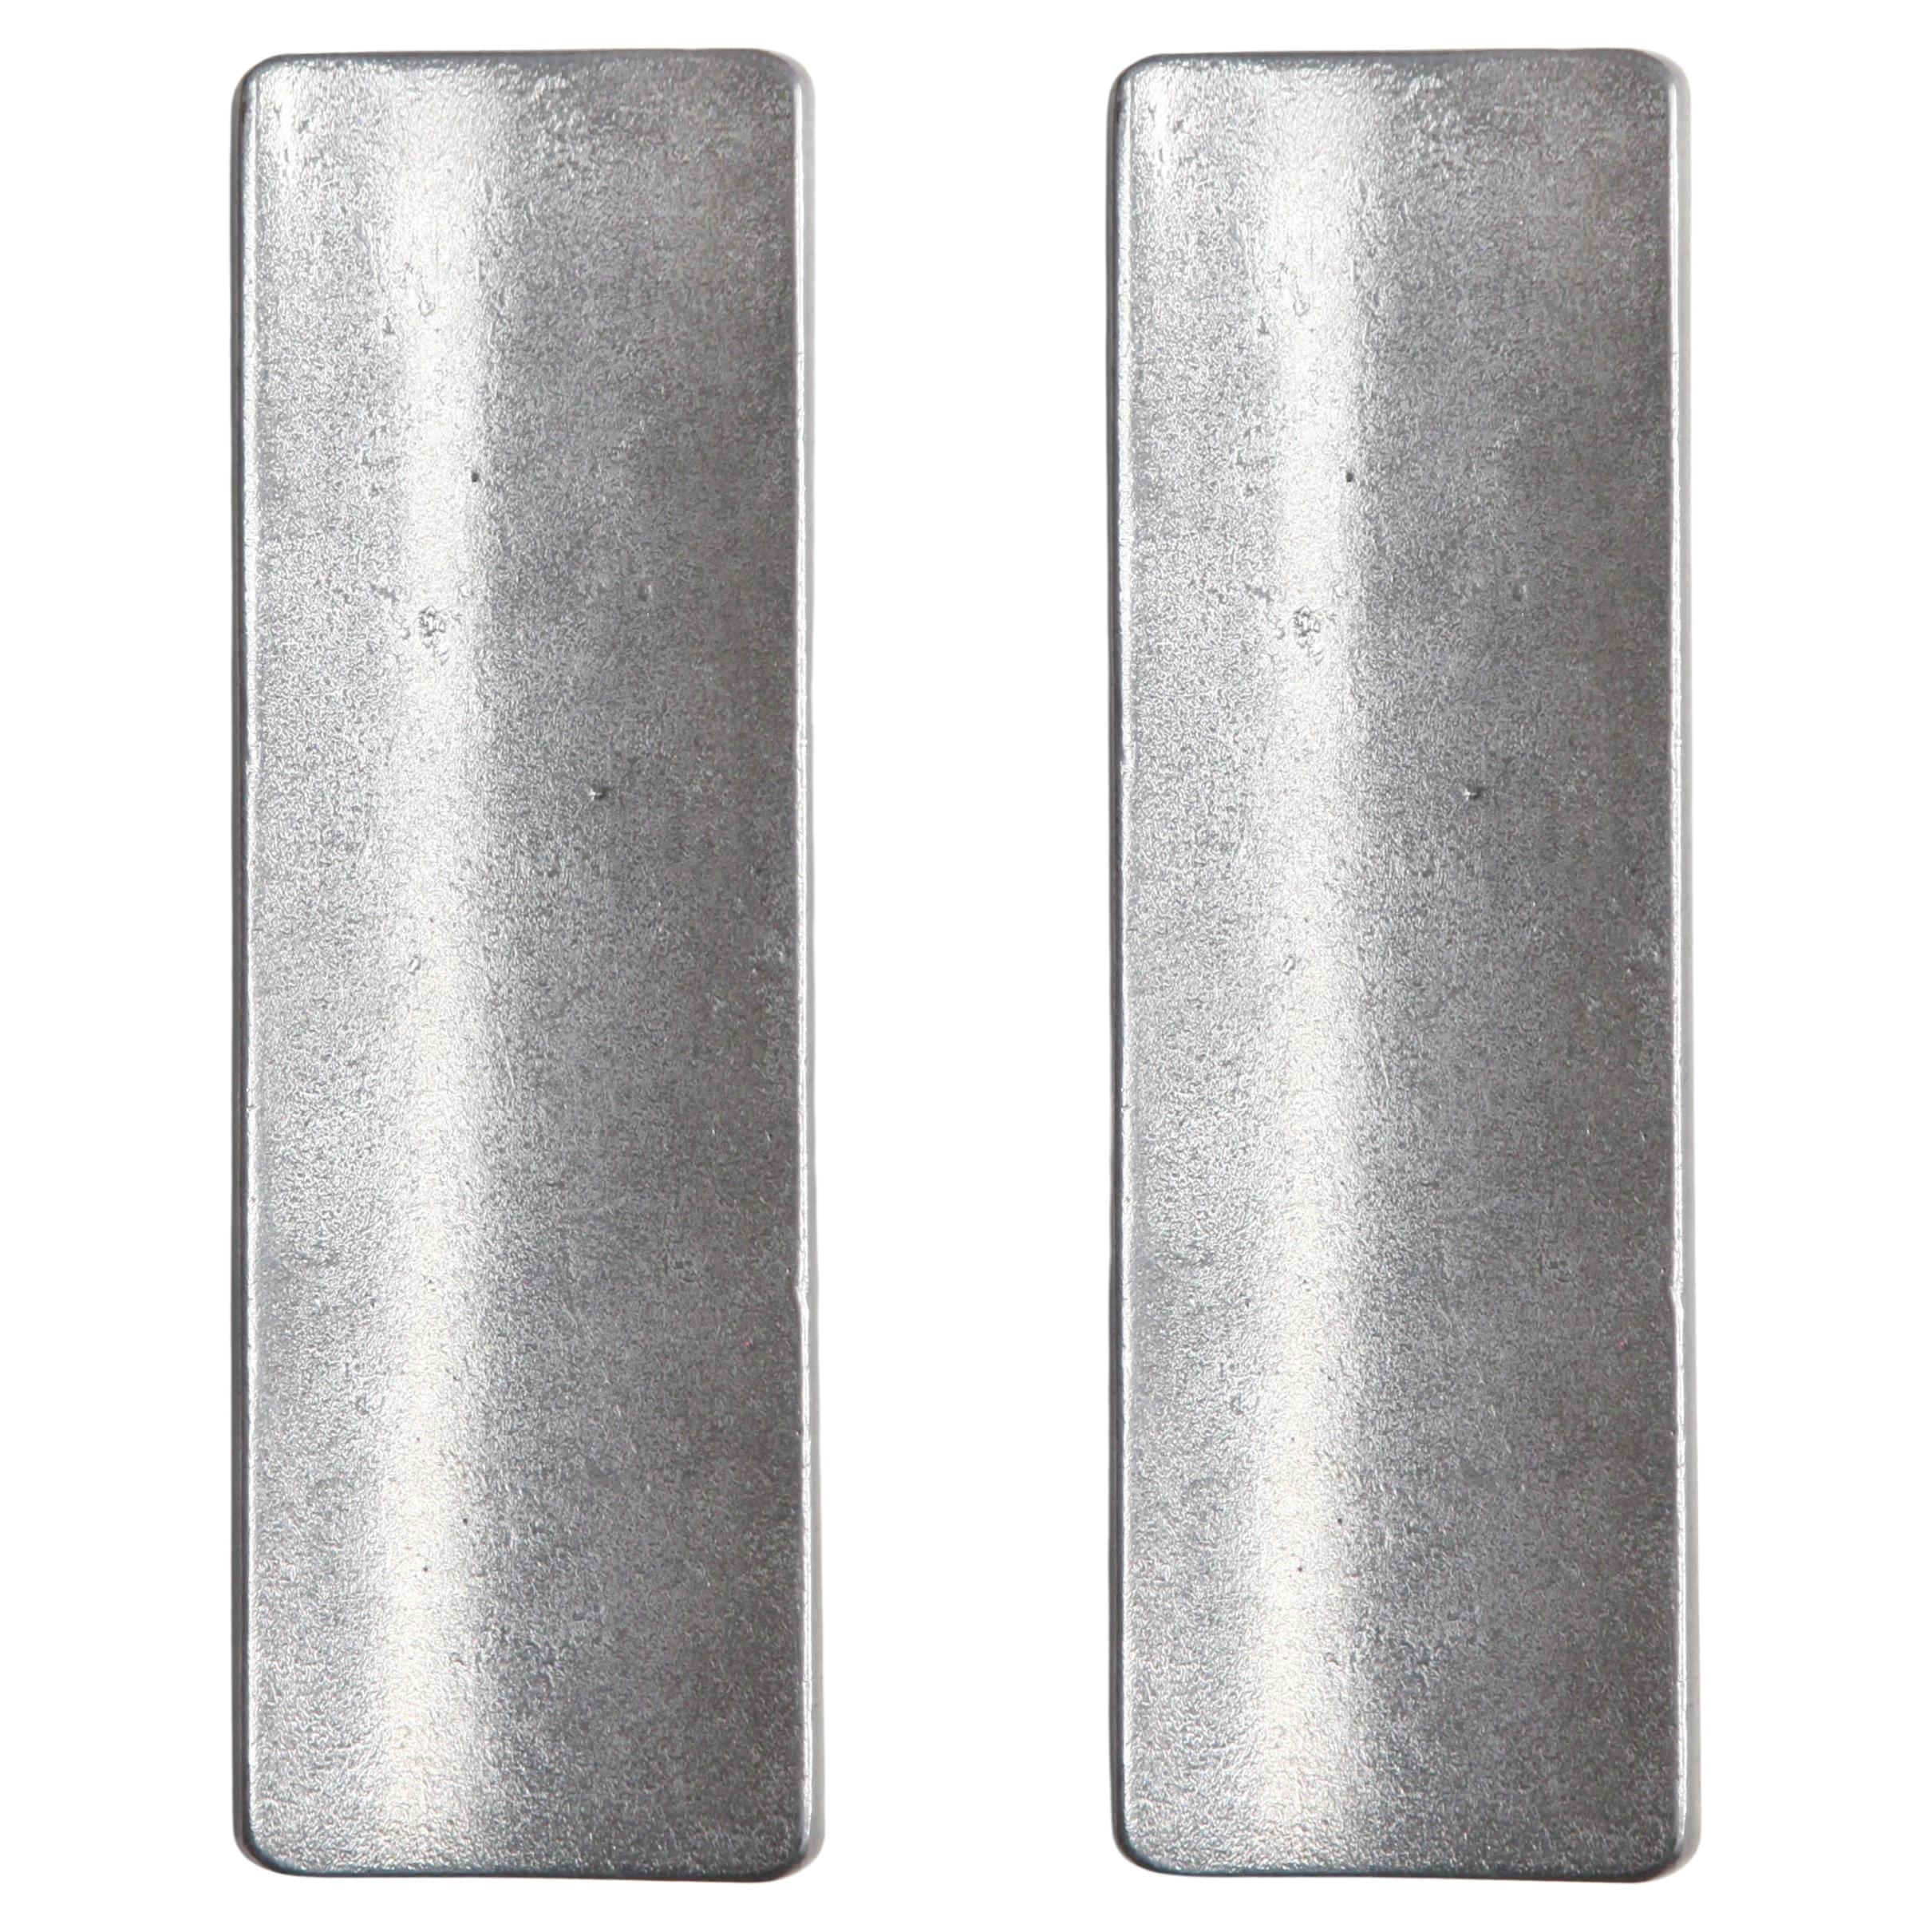 Set of 2 Aluminum Arc Pen Trays by Stem Design For Sale